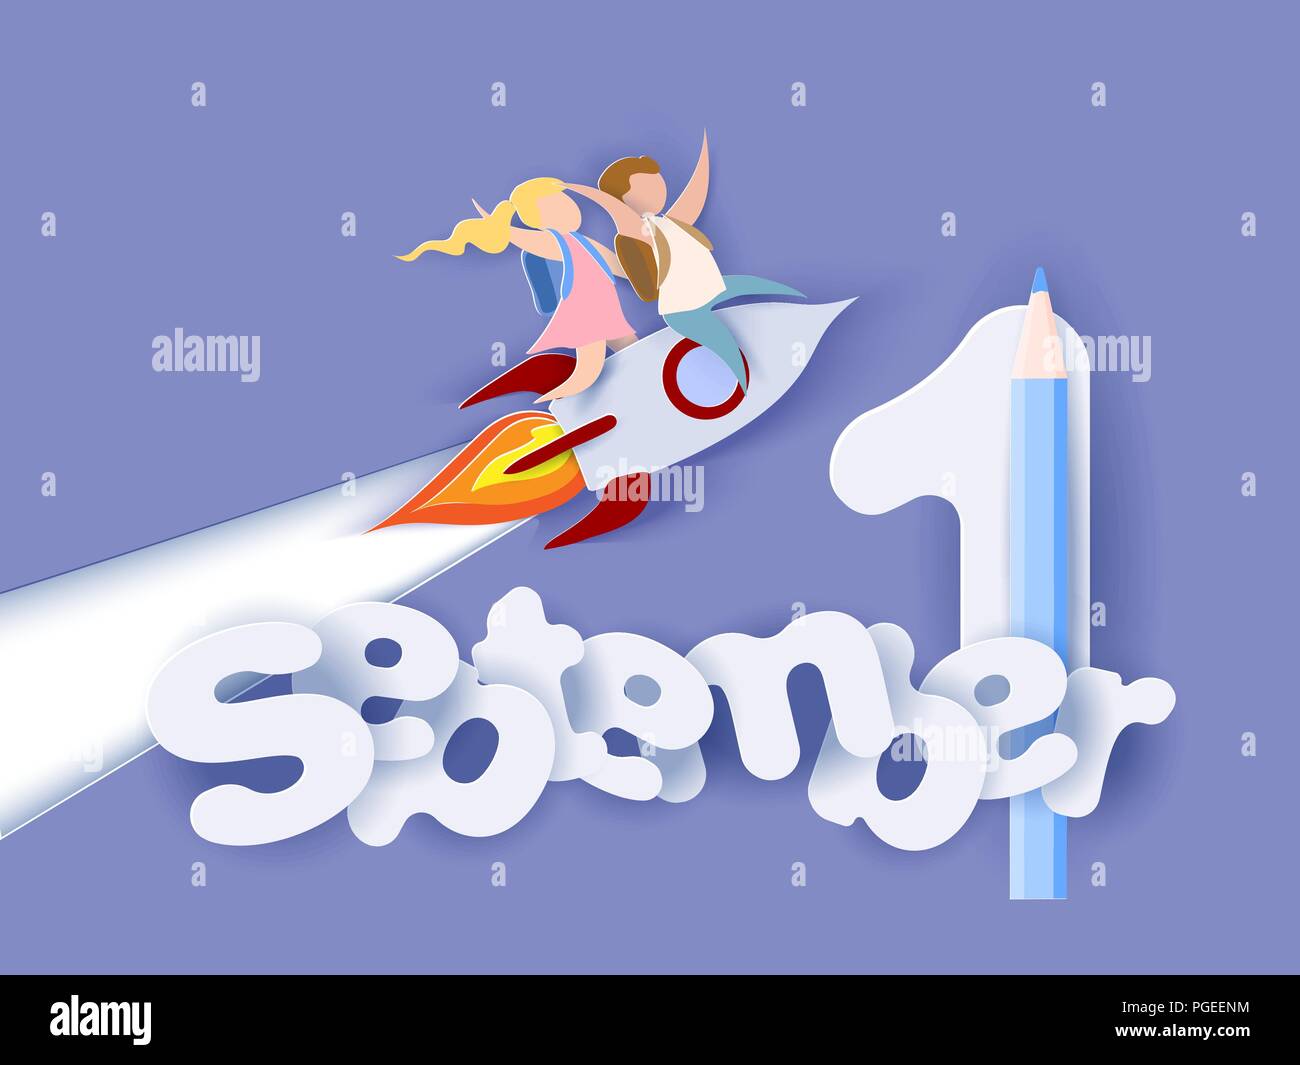 Back to school 1 september card. Children flying on rocket. Paper cut style. Vector illustration Stock Vector